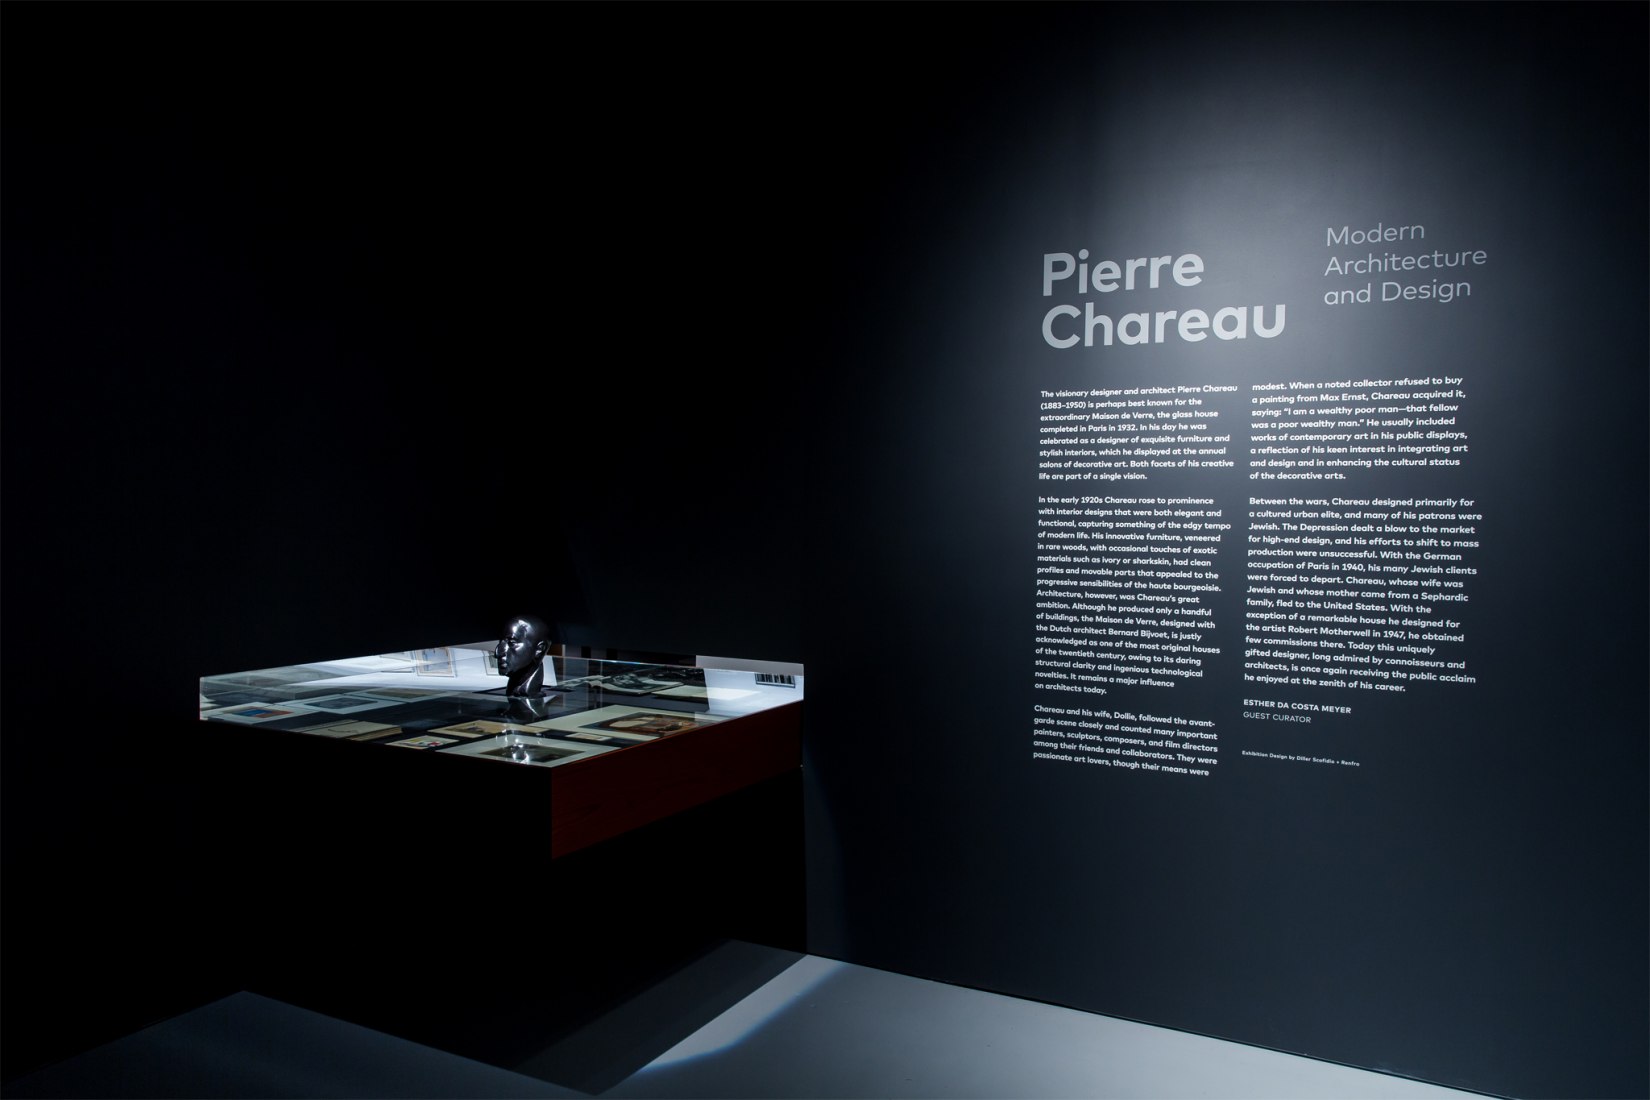 Installation view of the exhibition “Pierre Chareau: Modern Architecture and Design”. Photograph © Will Ragozzino. Exhibition design by Diller Scofidio + Renfro.